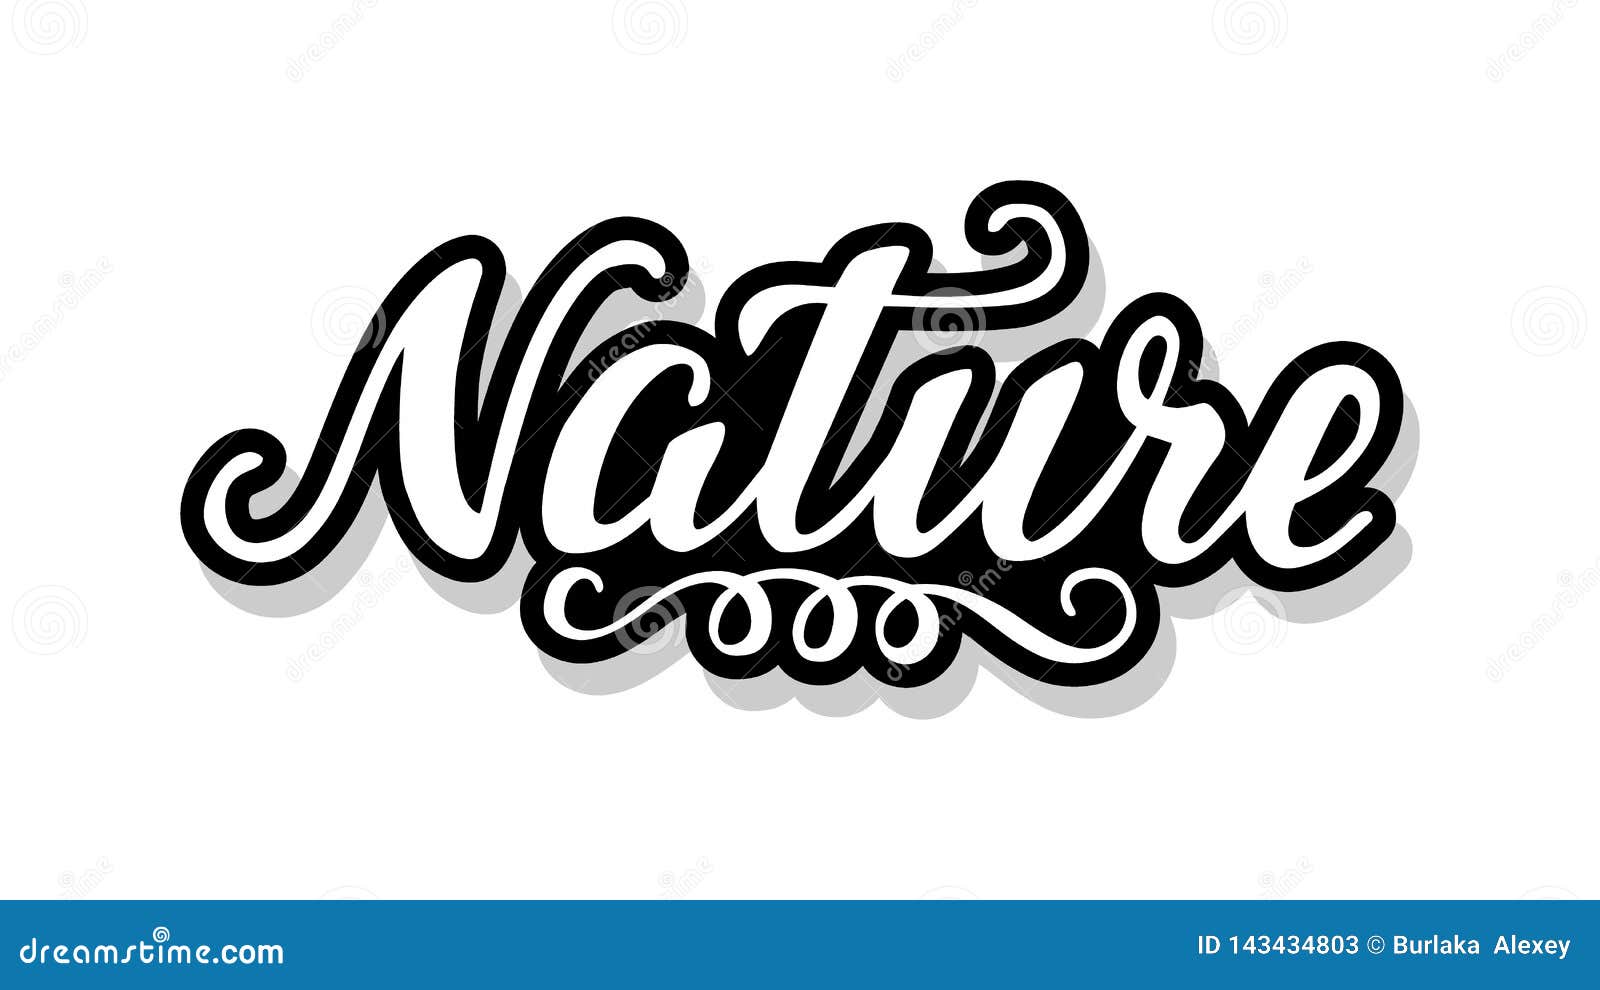 nature writing titles